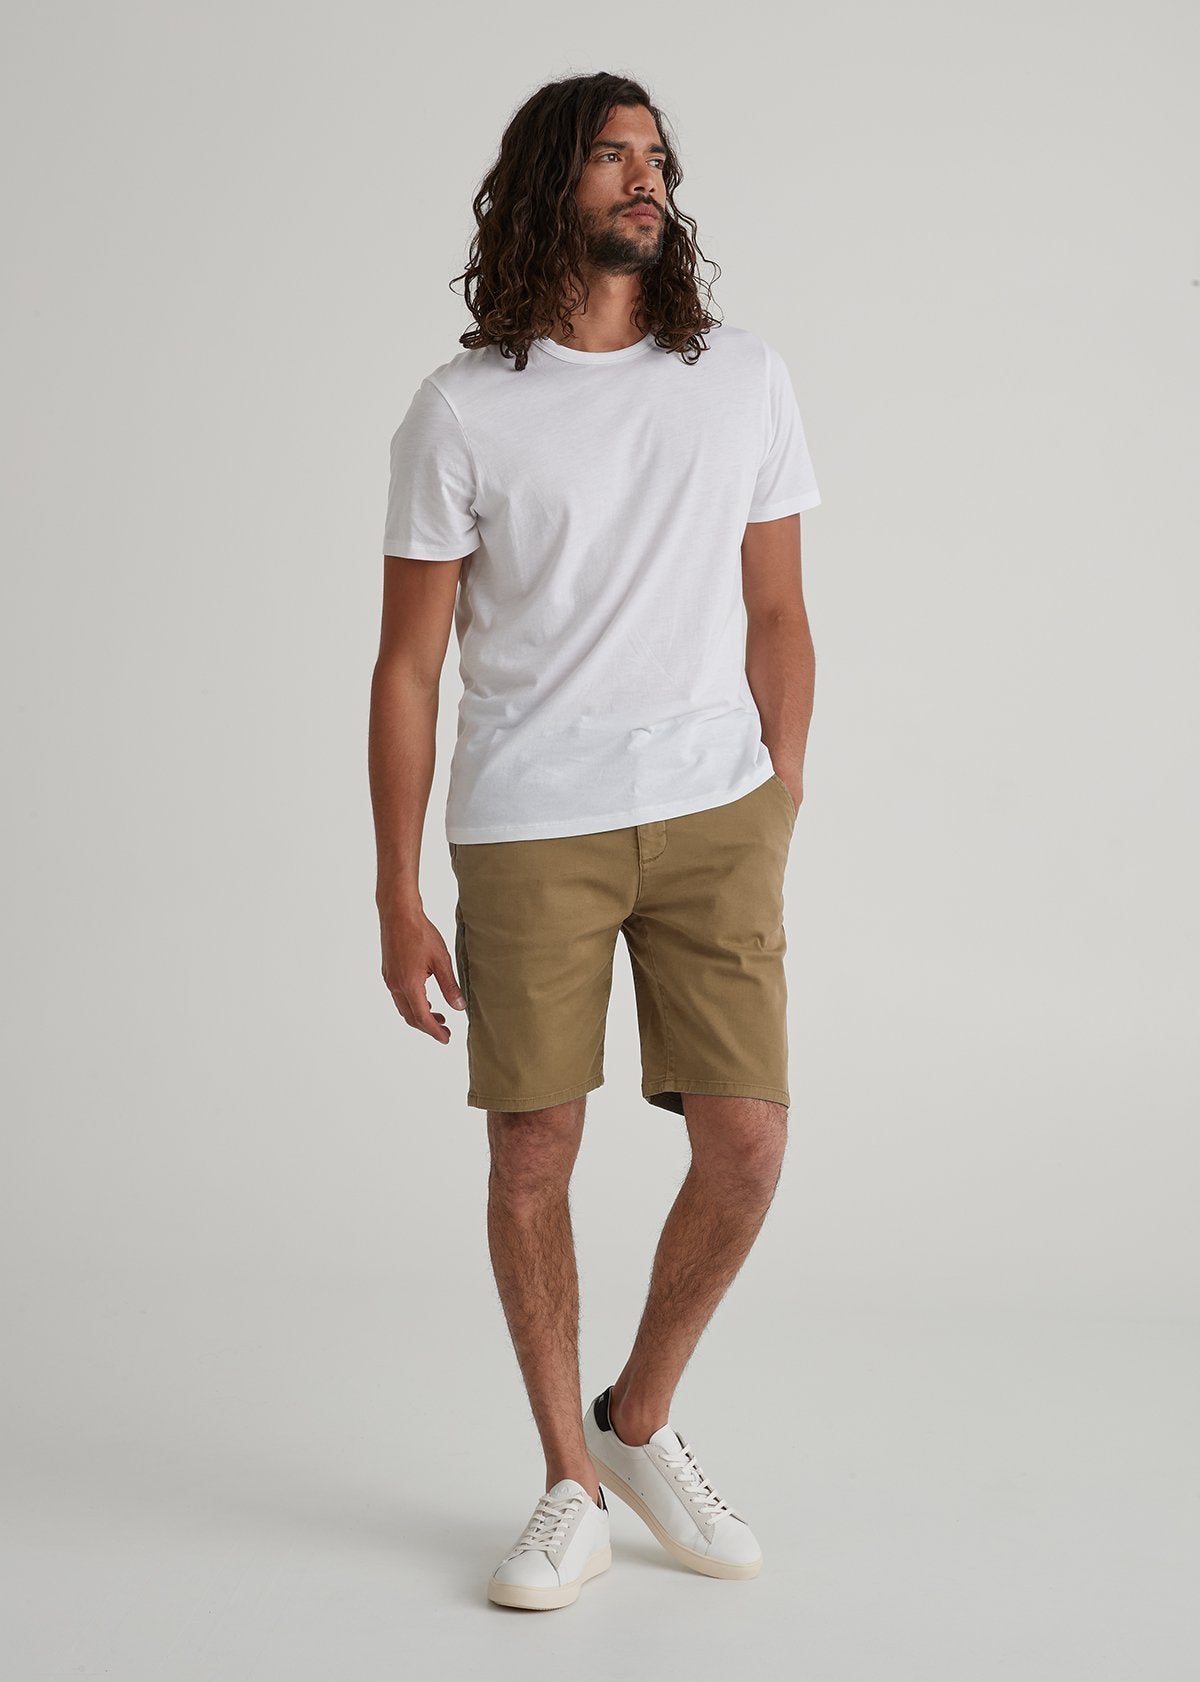 All in Motion Men's Soft Stretch Shorts 9 - (US, Alpha, Small, Regular,  Regular, Light Gray) at  Men's Clothing store